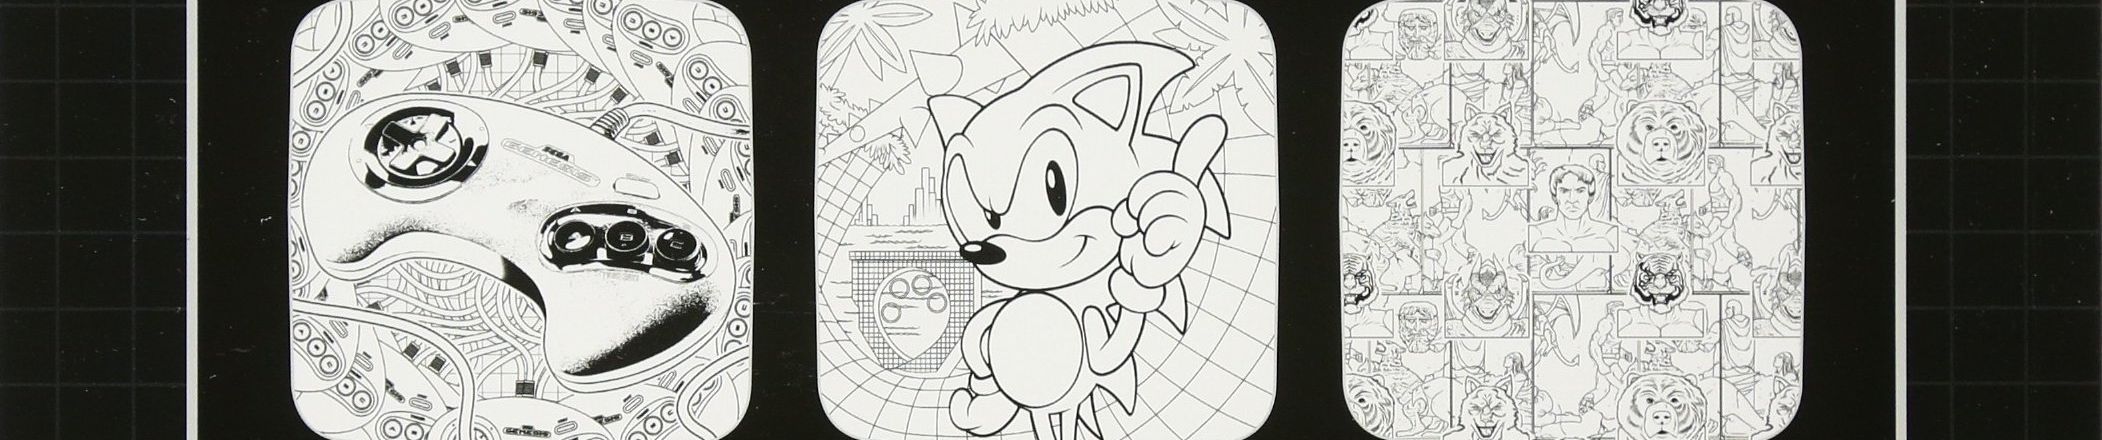 Stream Sonic The Hedgehog 3 (Nov 3, 1993 Beta) - Launch Base Act 1 by  JasonBlueOST